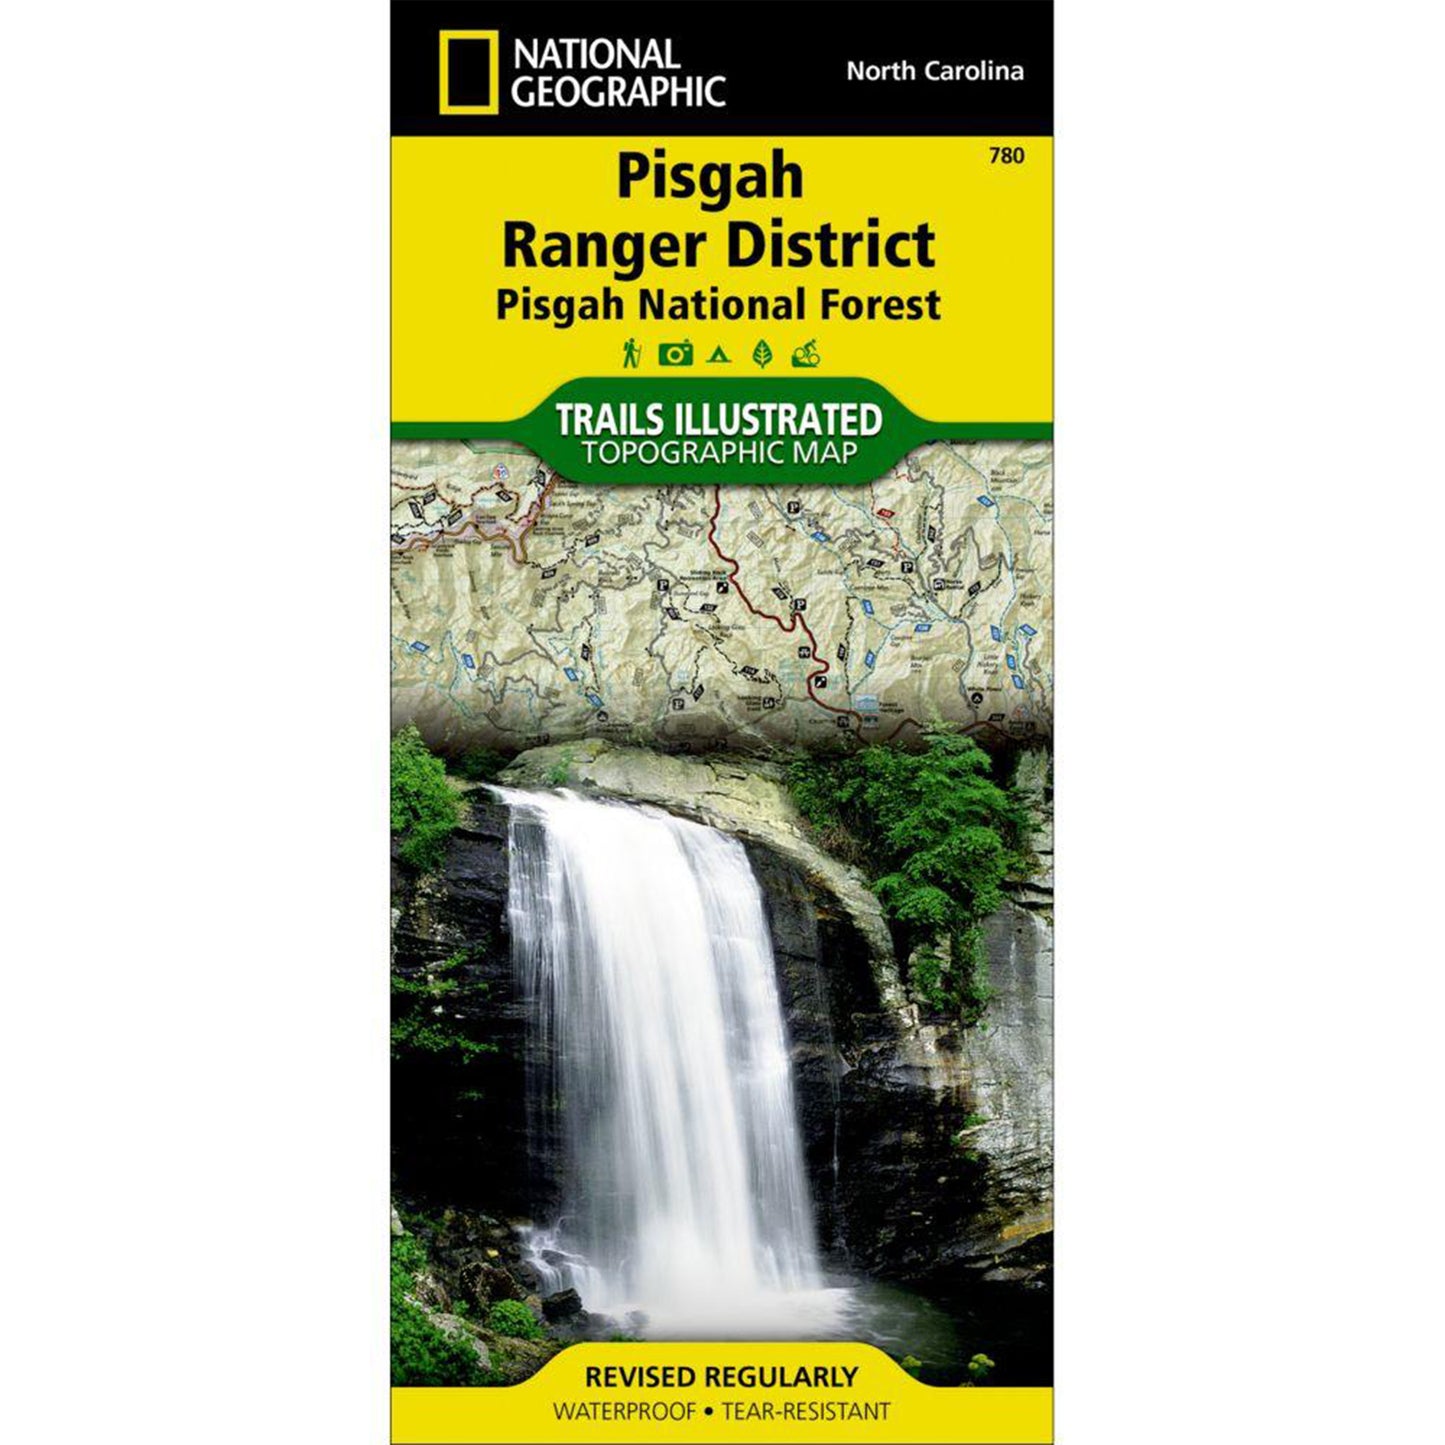 Pisgah Ranger District, Pisgah National Forest